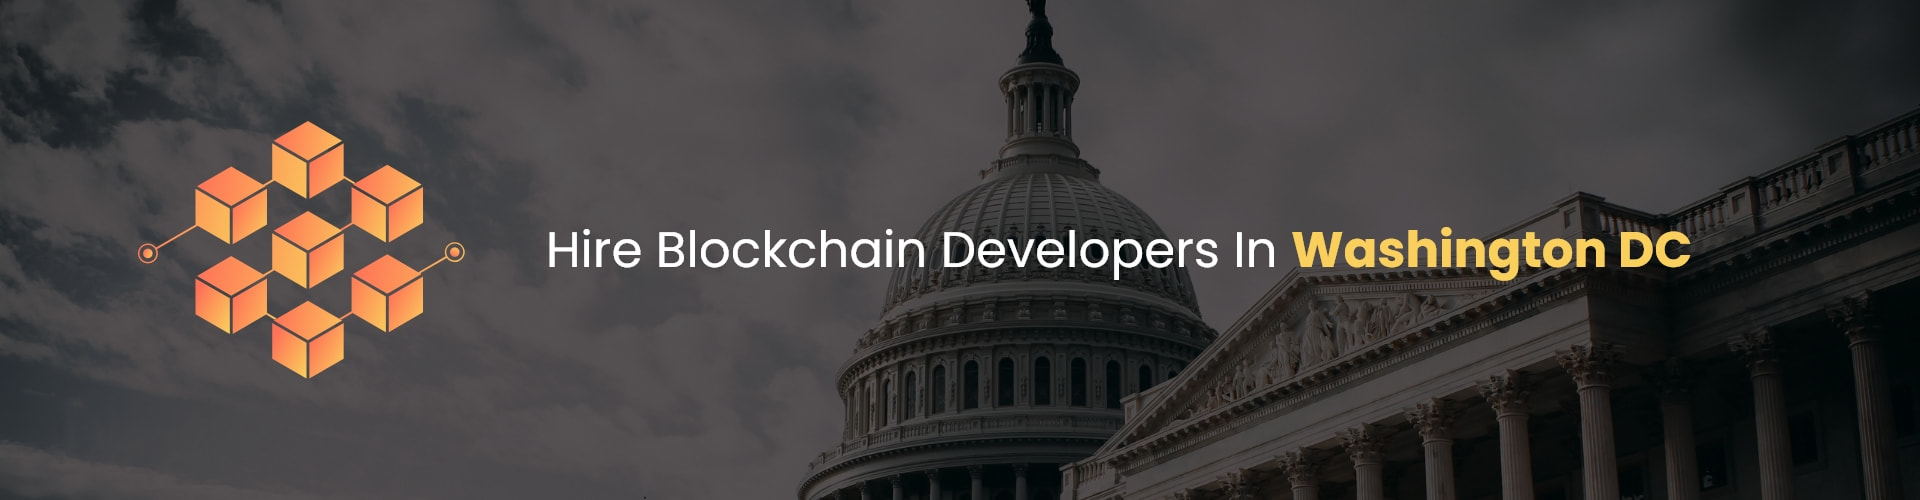 hire blockchain developers in washington dc